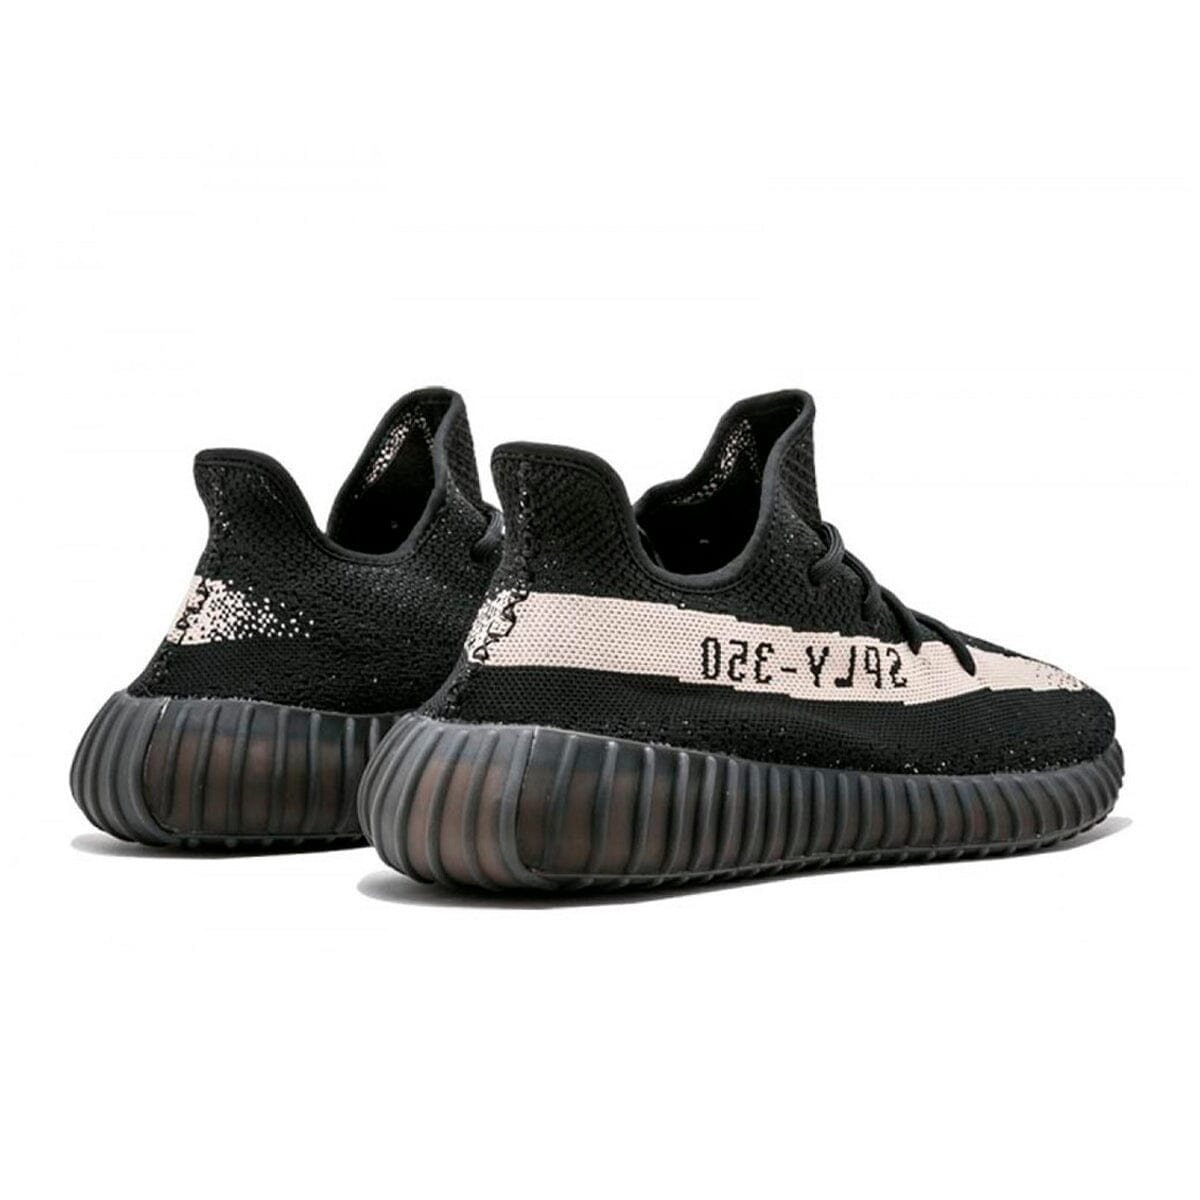 Adidas Yeezy 350 v2 Oreo Yeezy 350 Blizz Sneakers 